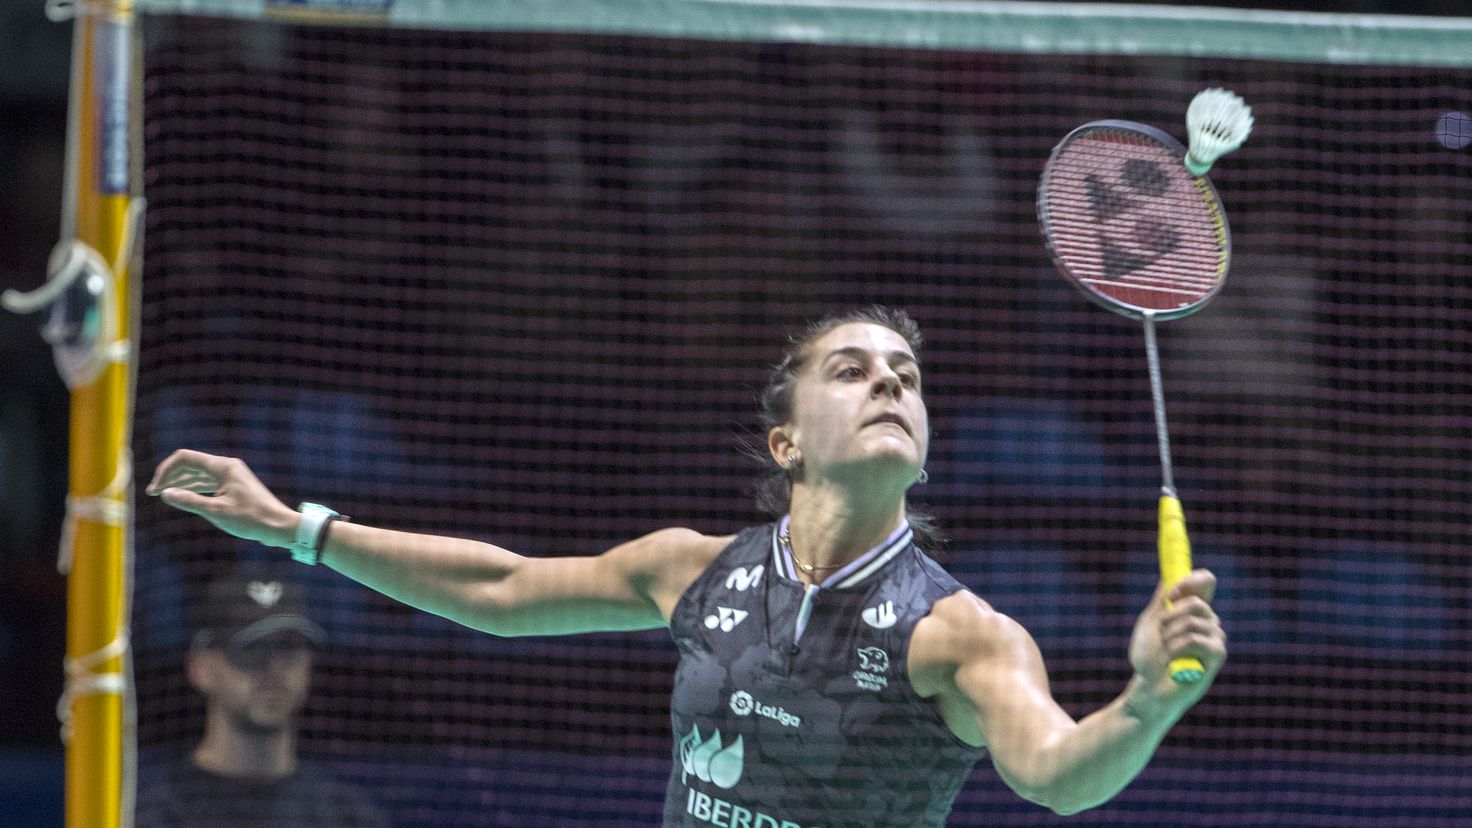 Carolina Marín advances to the second round in Thailand
